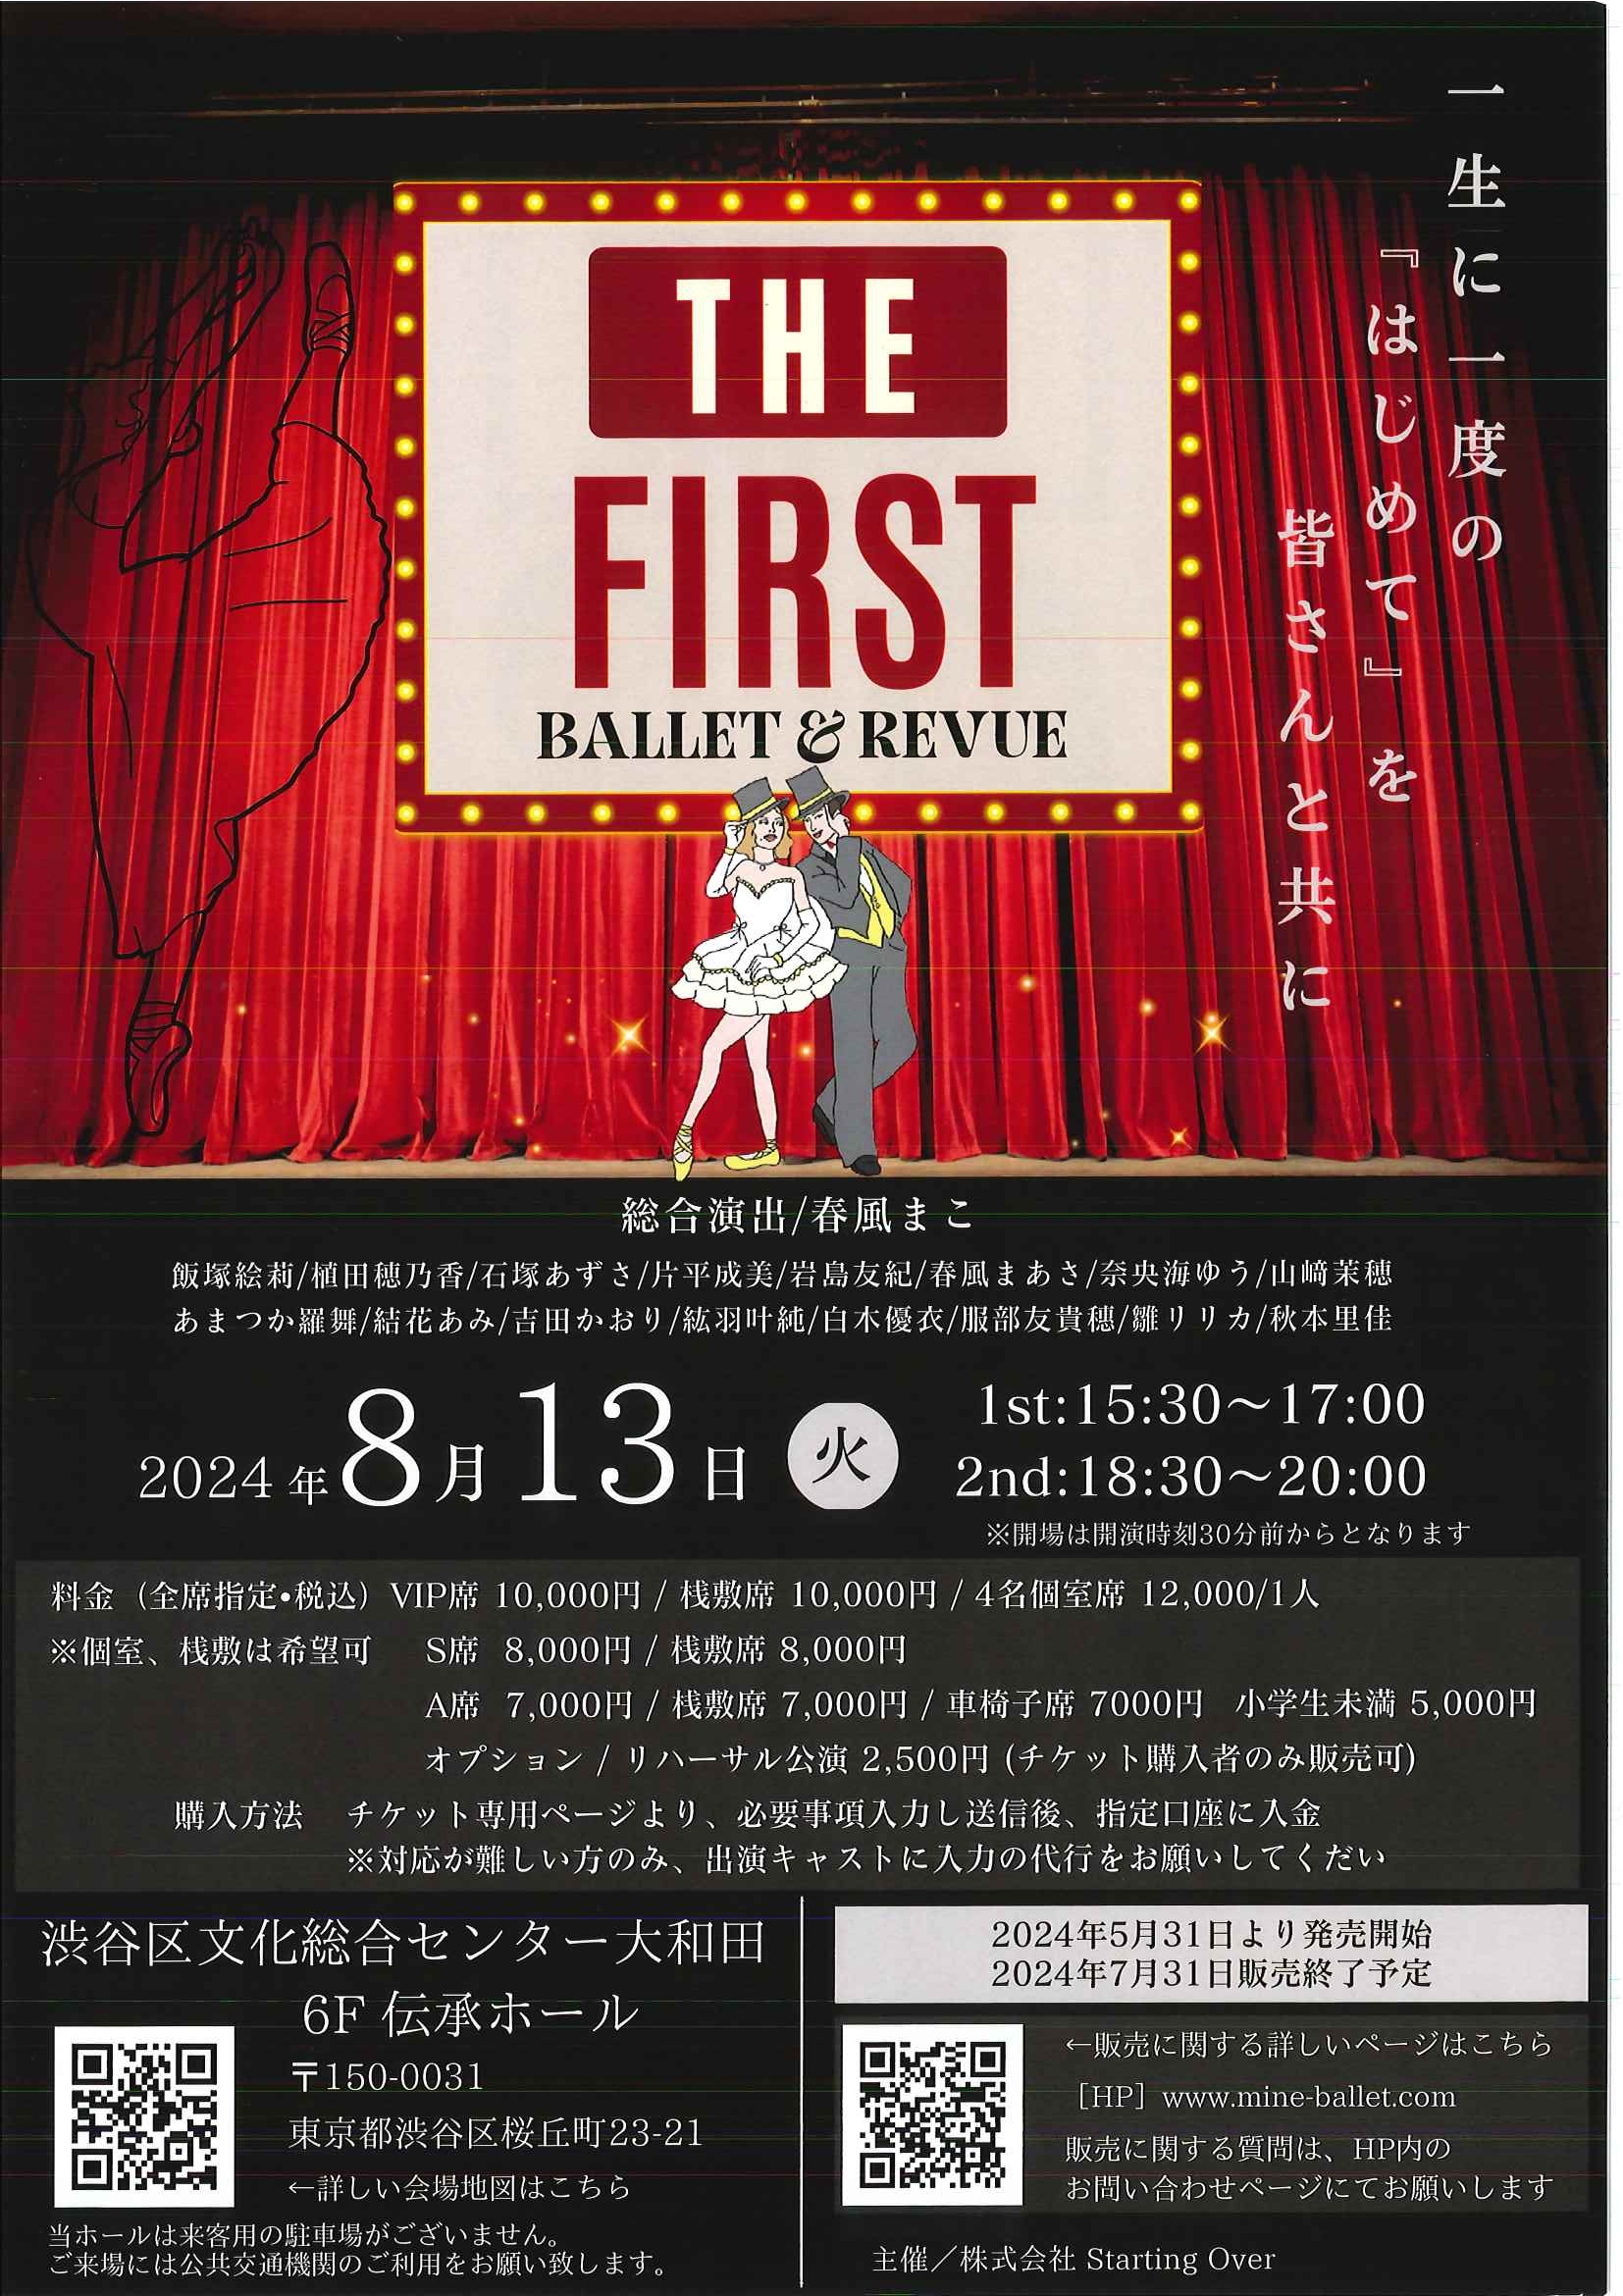 8/13 THE FIRST　BALLET & REVUE